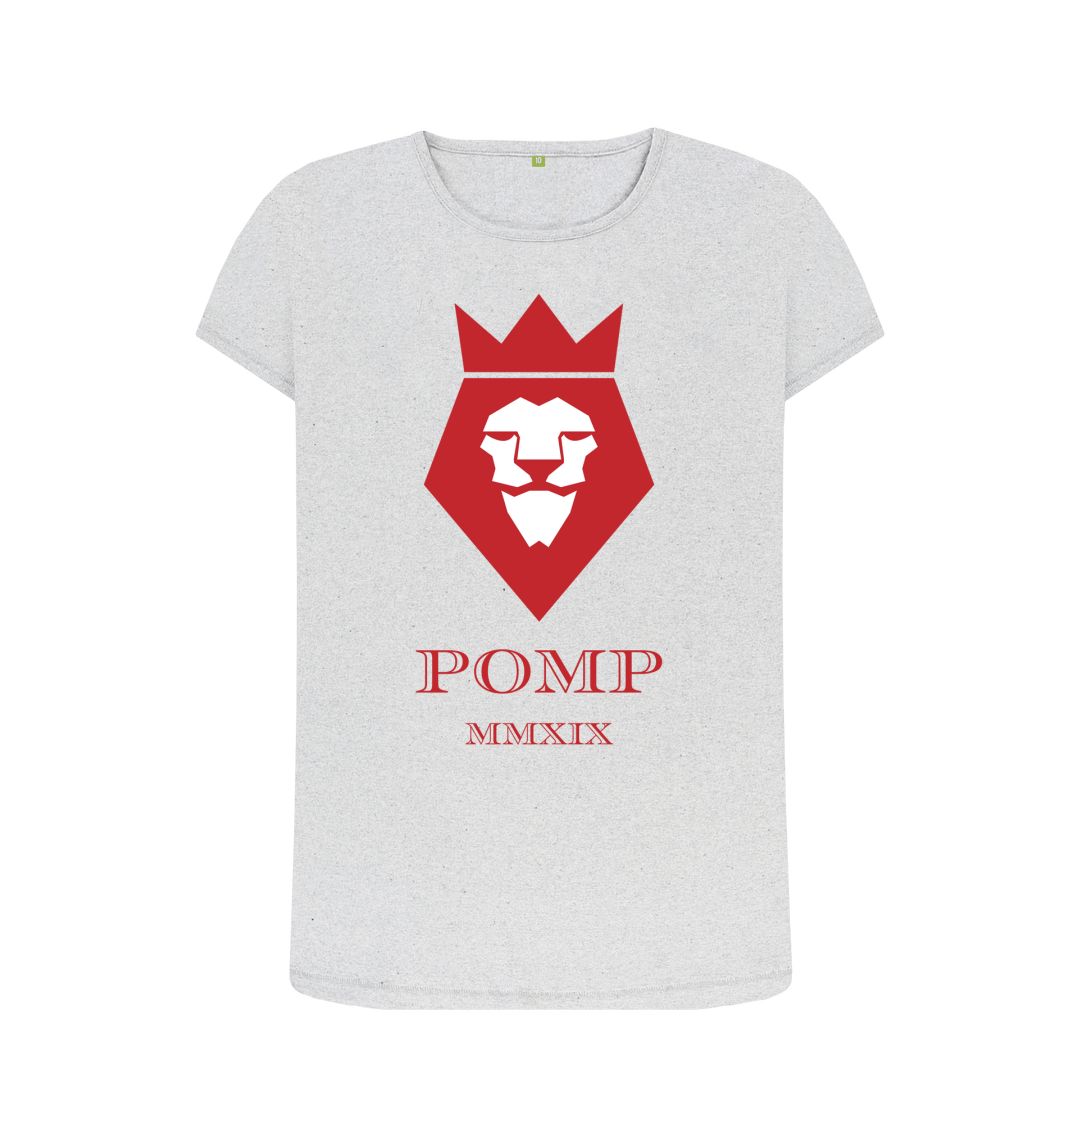 Grey Women's POMP MMXIX circular t-shirt